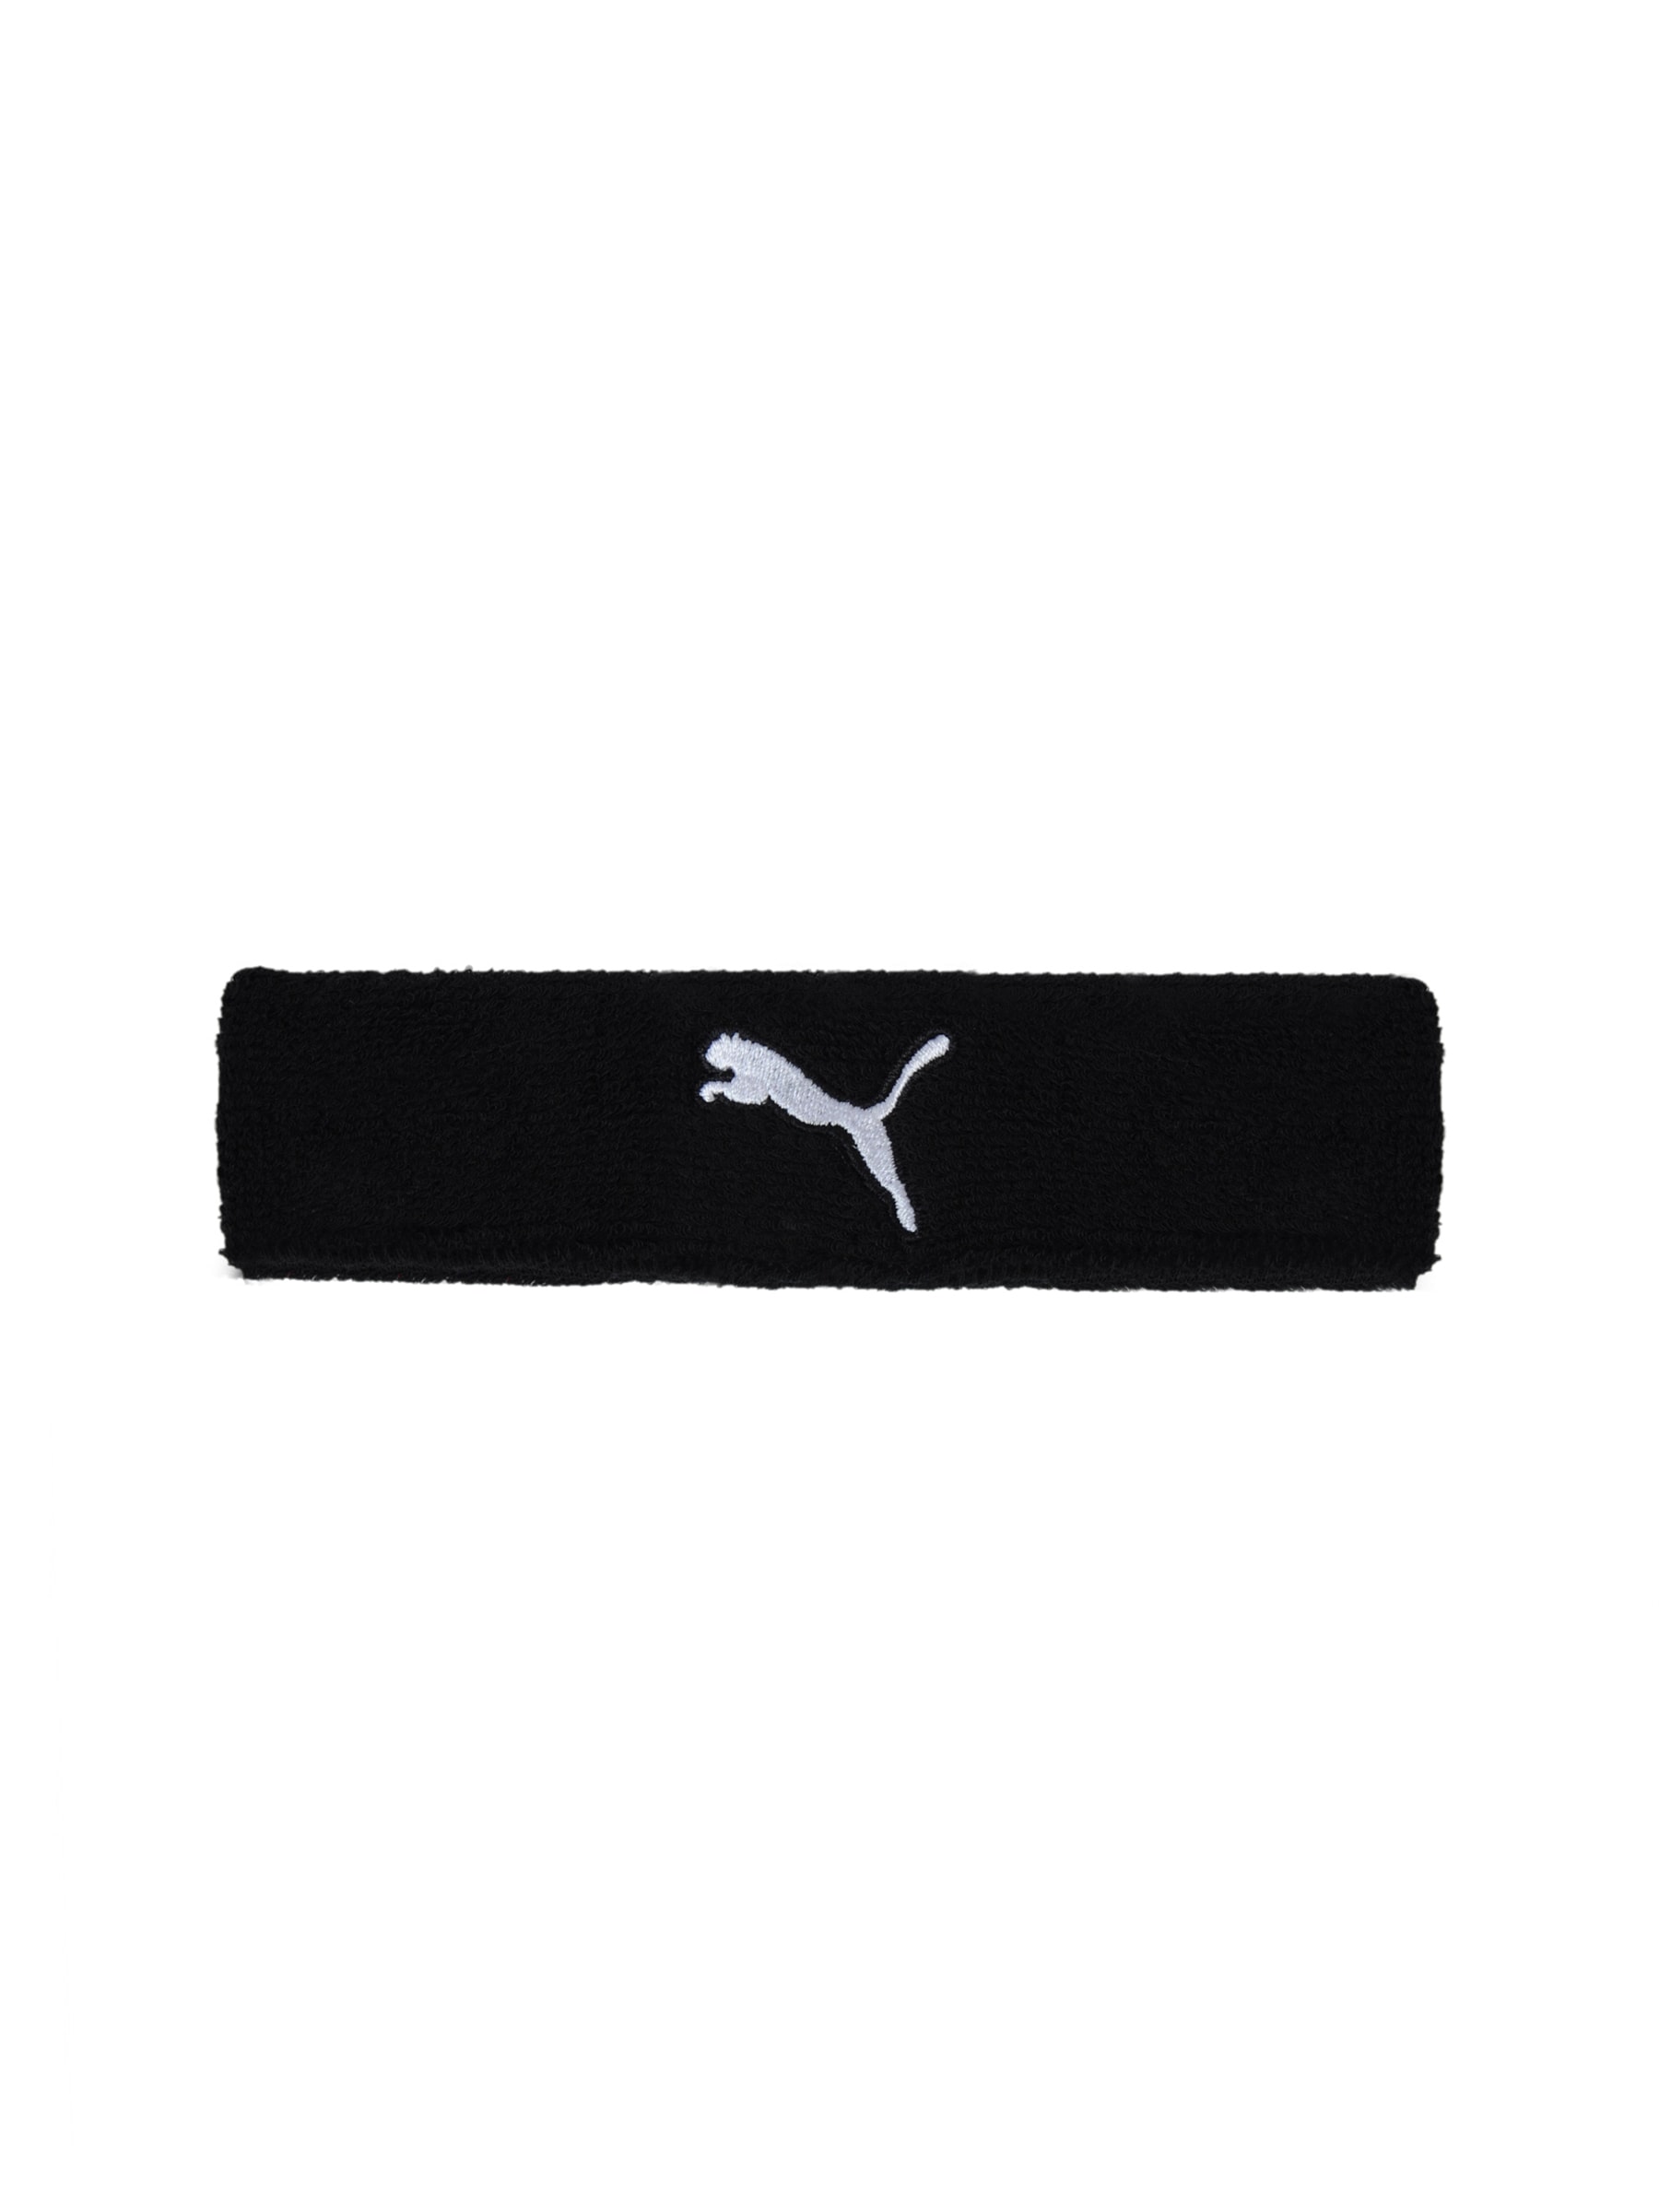 Puma Unisex Cat Black Headband